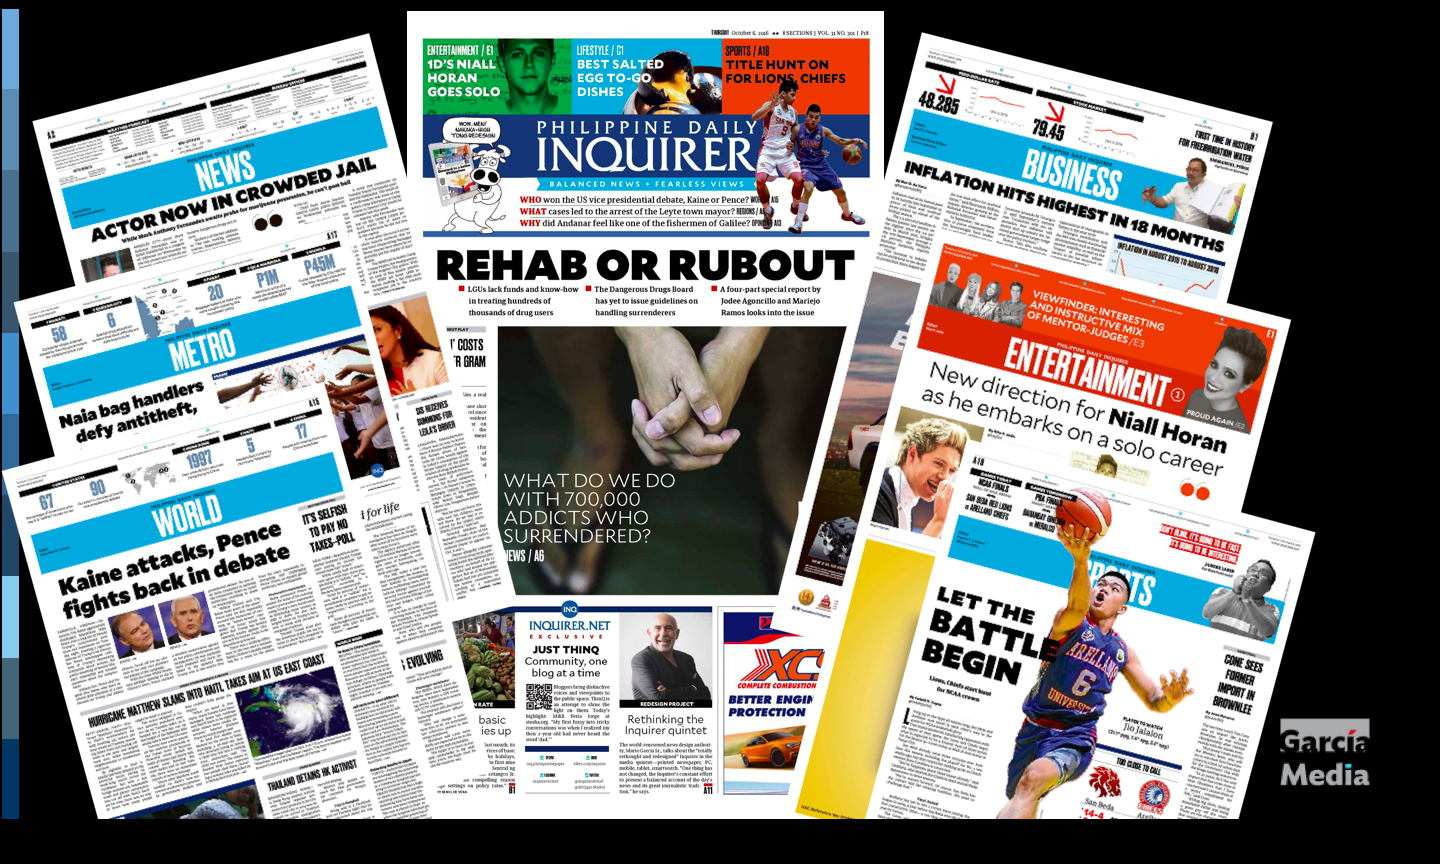 journal inquirer news today